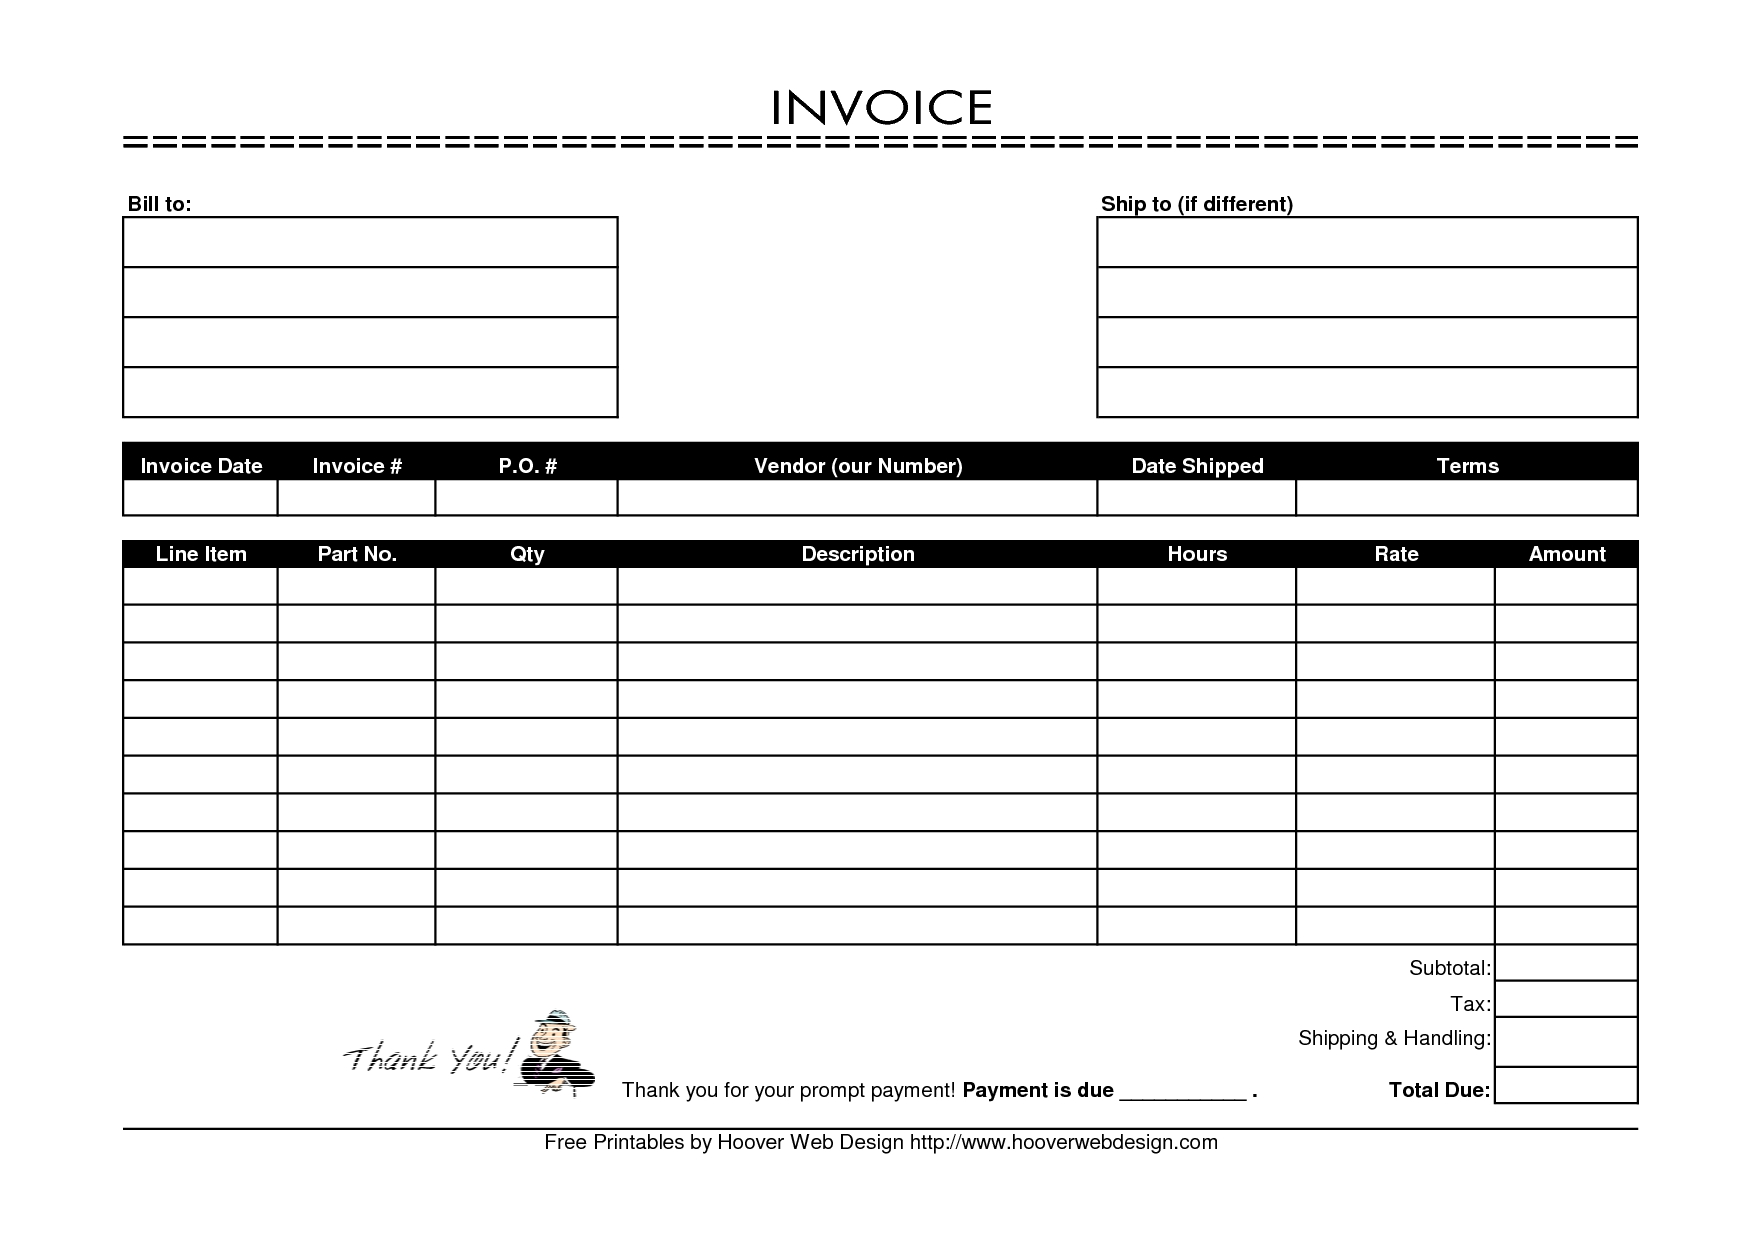 free printable invoice free to do list free printable invoices online